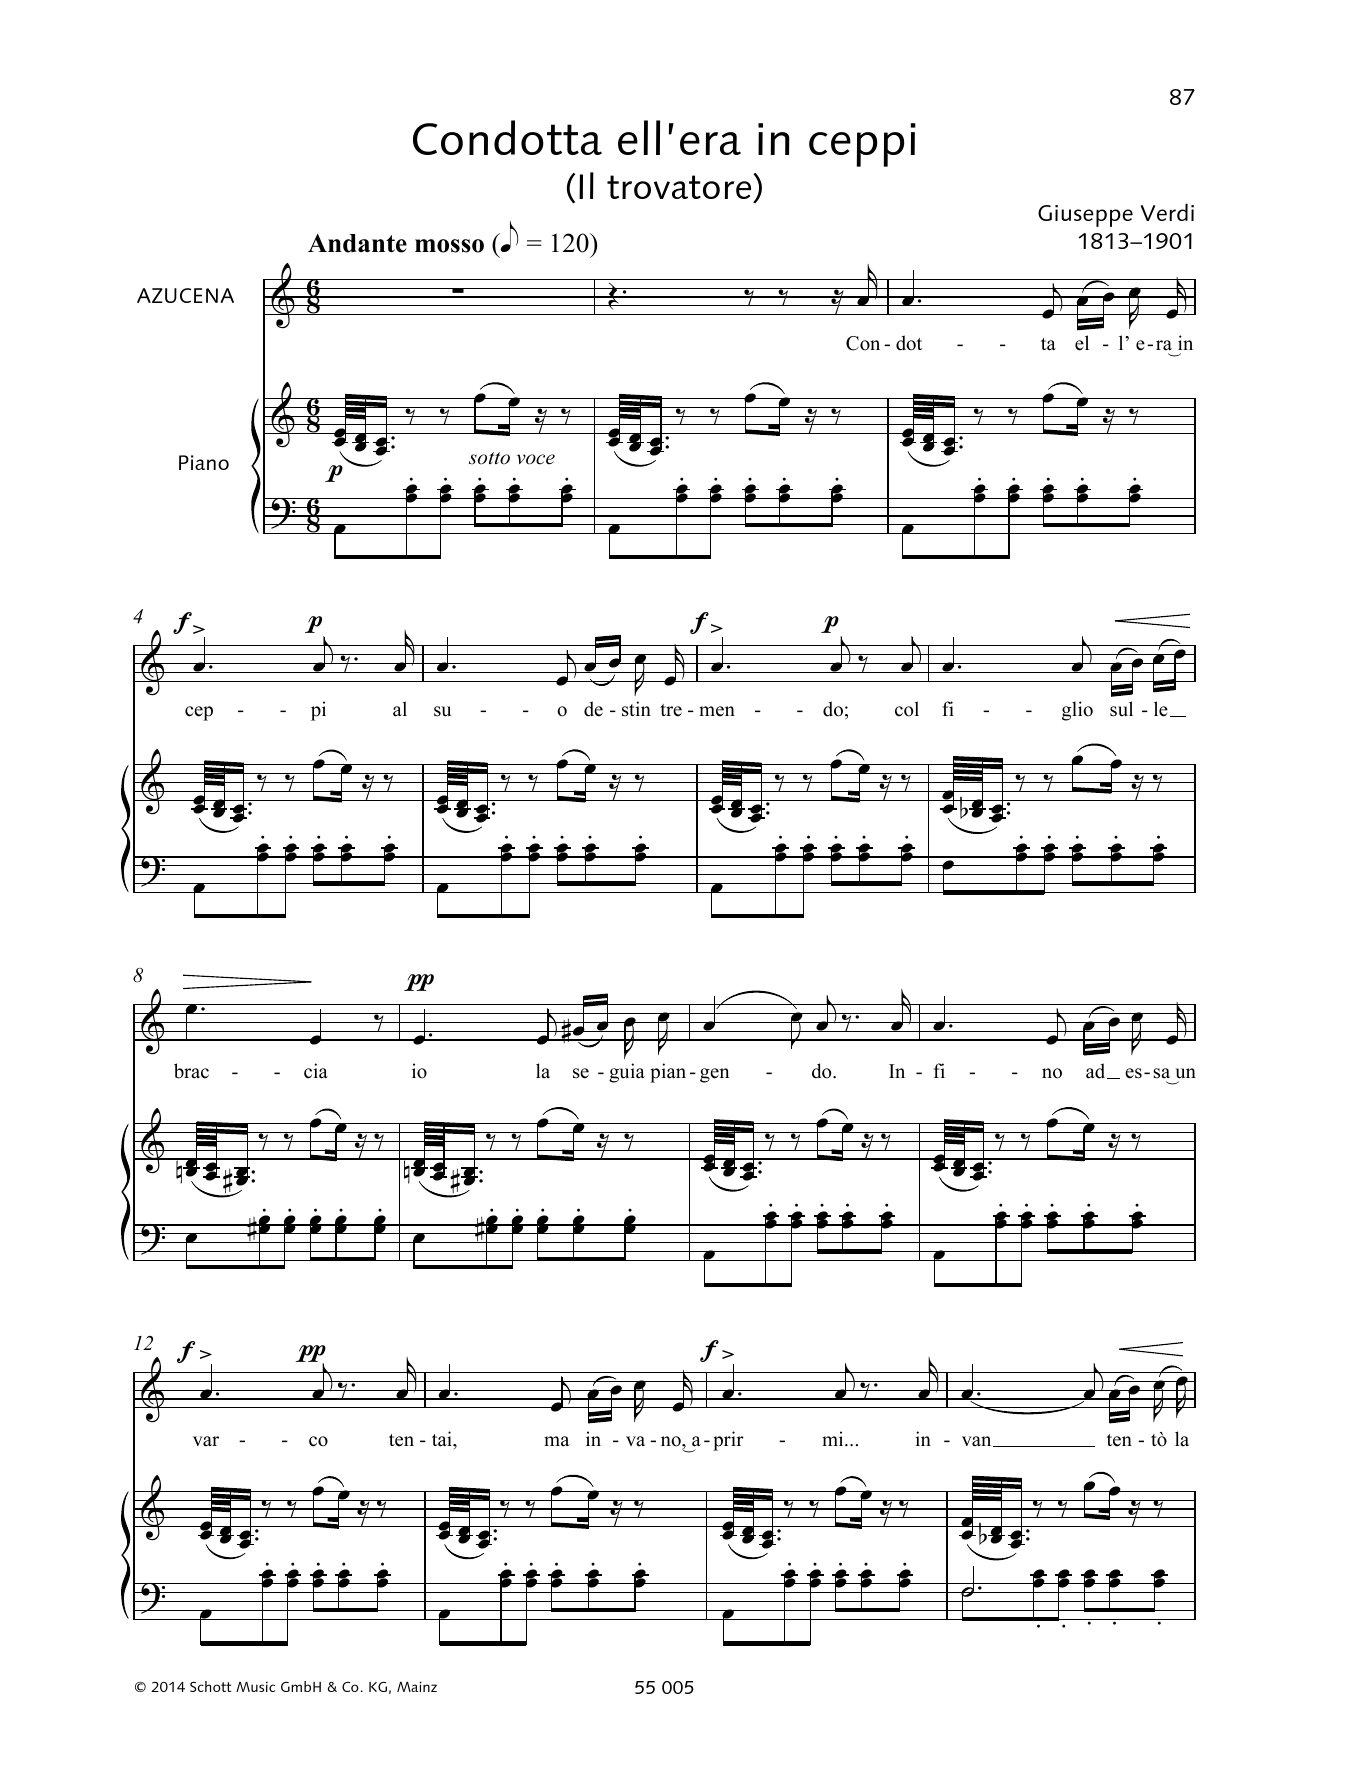 Giuseppe Verdi Condotta ell'era in ceppi Sheet Music Notes & Chords for Piano & Vocal - Download or Print PDF